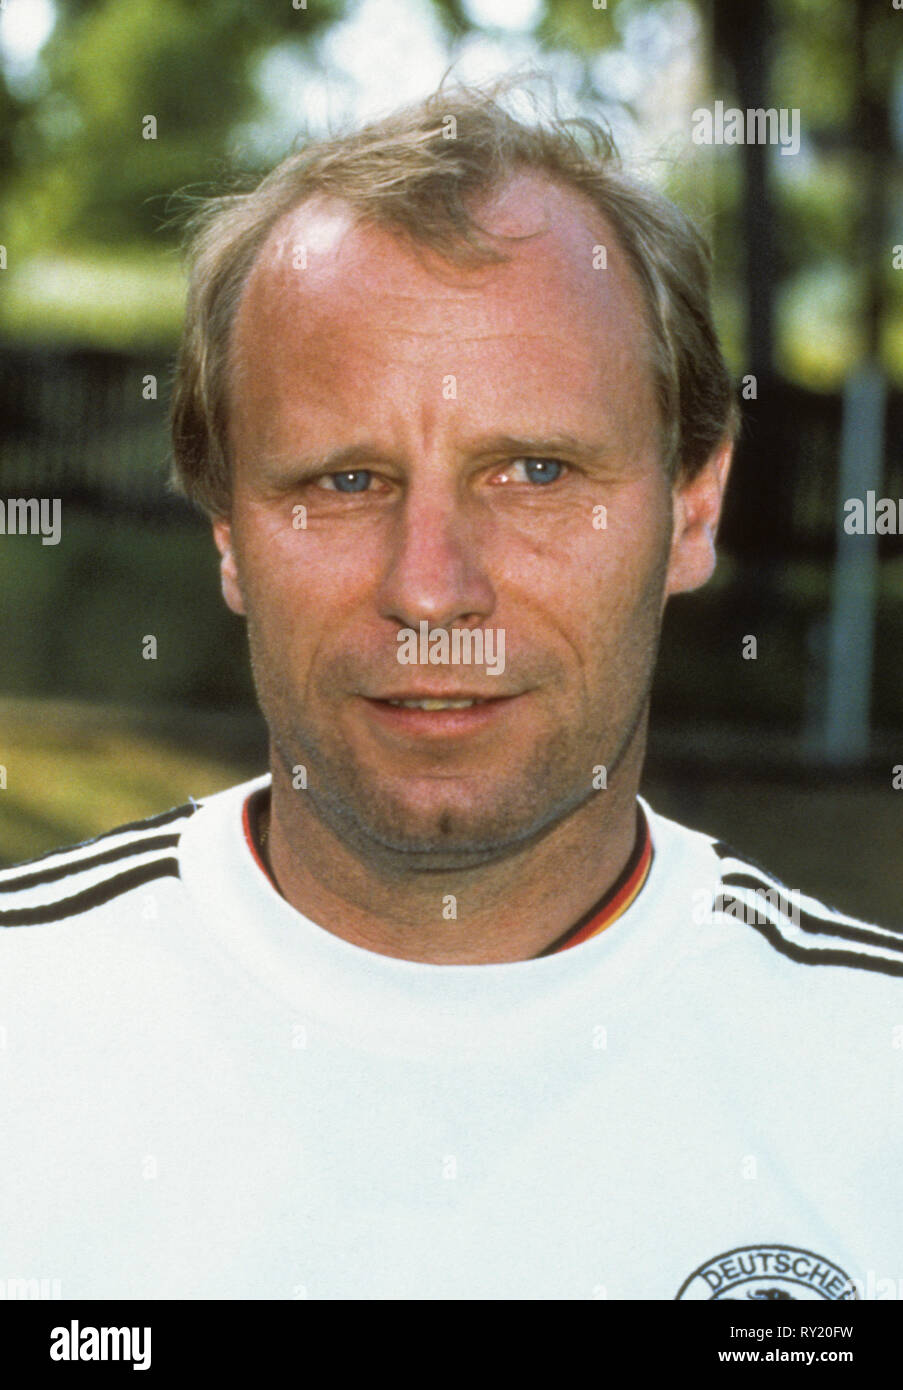 Berti Vogts former German footballer played in Borussia Mönchengladbach in Bundesliga Stock Photo